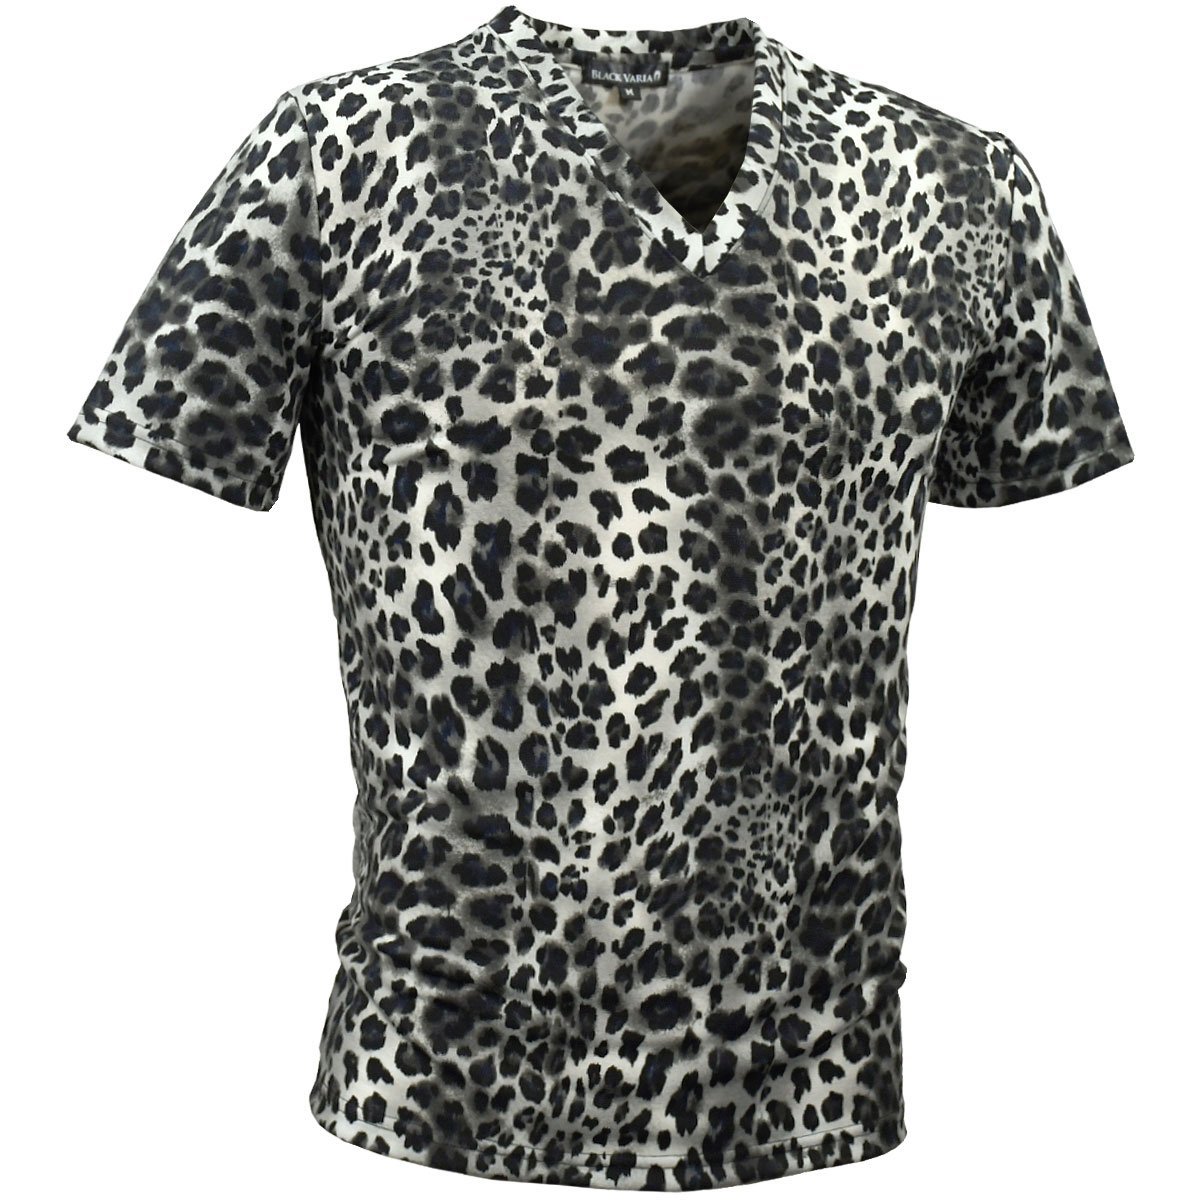 193802-gy ブラックバリア ヒョウ 豹 Vネック レオパード 日本製 スリム 半袖Tシャツ メンズ(ブラック黒グレー) 3L 総柄 アニマル 総柄_画像7